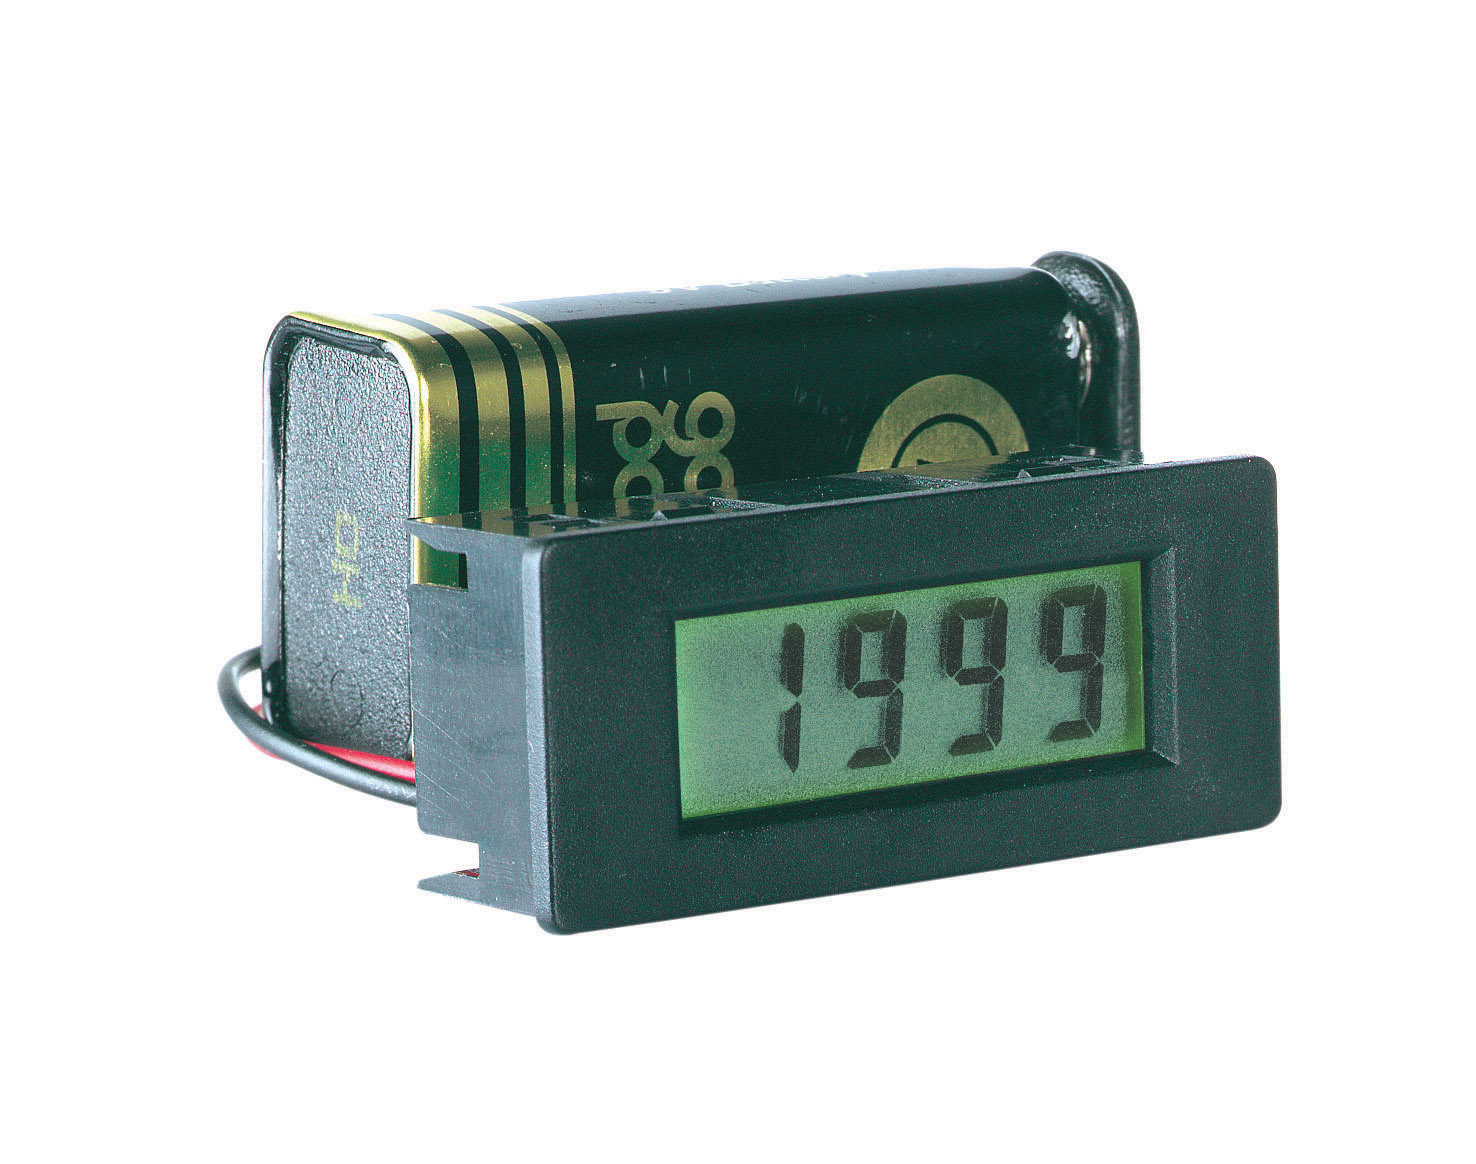 «PeakTech® LDP-340» Volt & ammeter, LCD display 8mm hight of digits